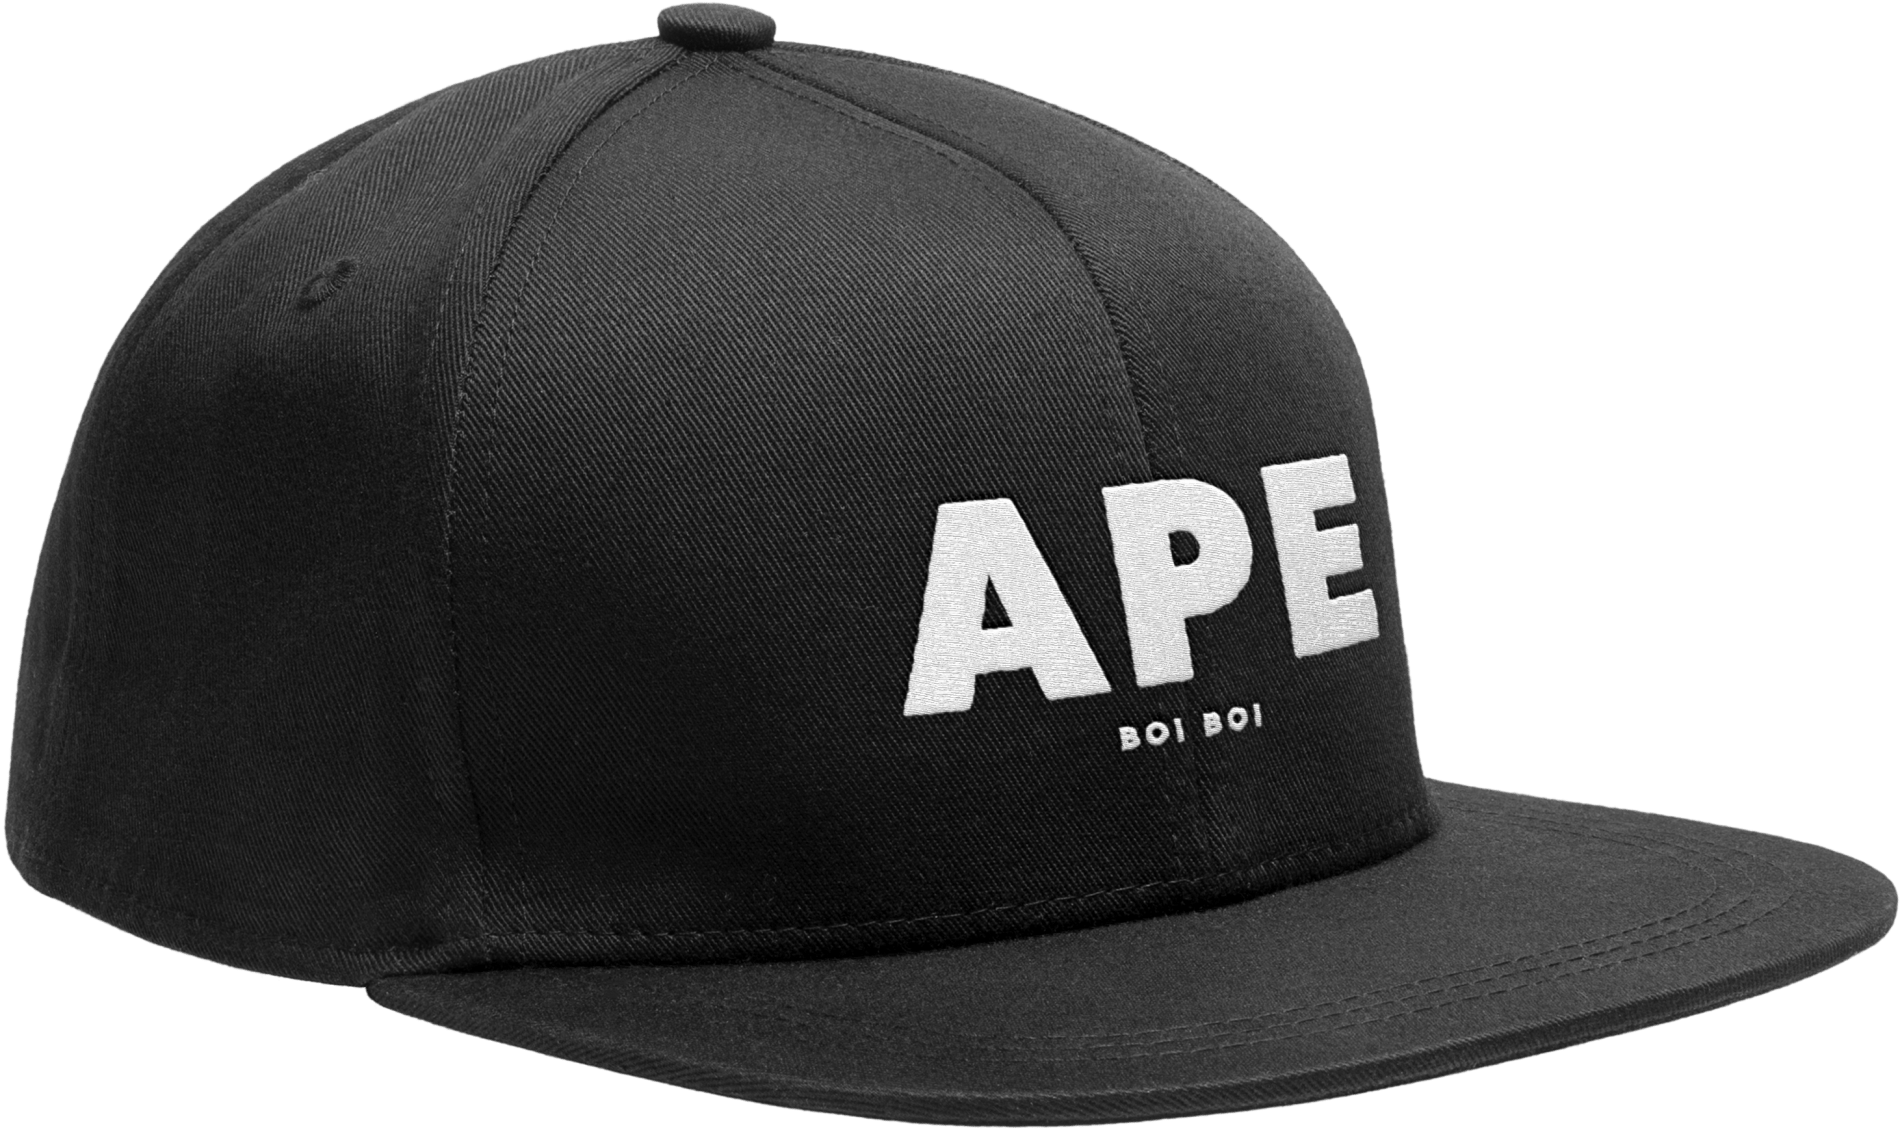 Ape snapback - Boi Boi Shop